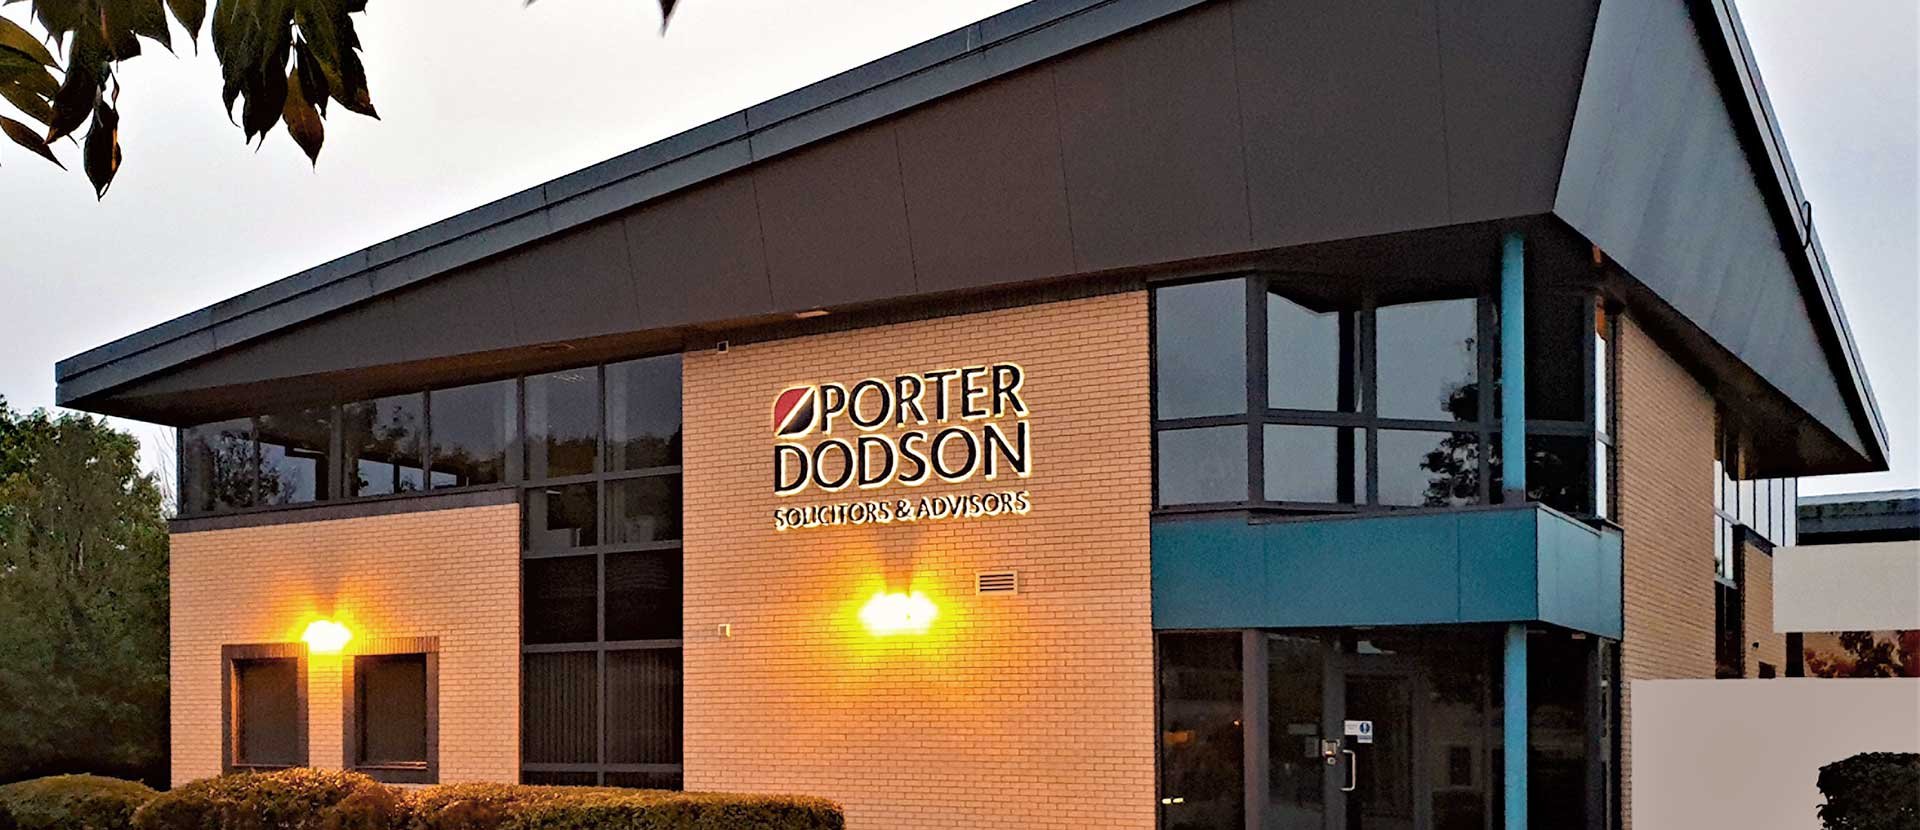 why-choose-porter-dodson-header